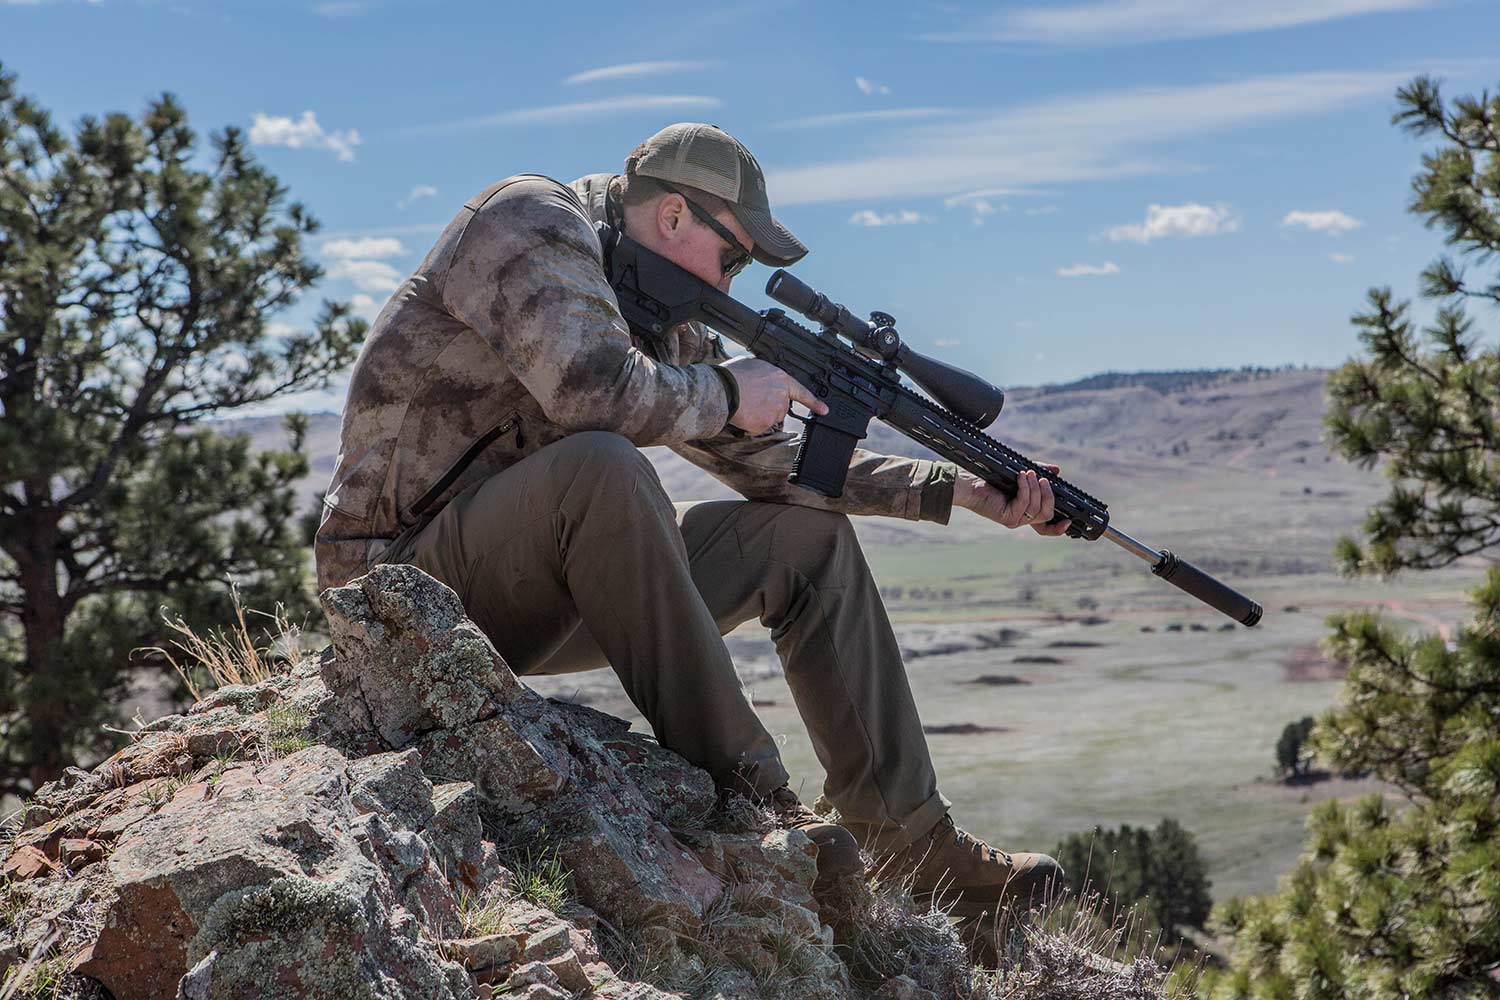 hunter firing a rifle with a muzzle suppressor.